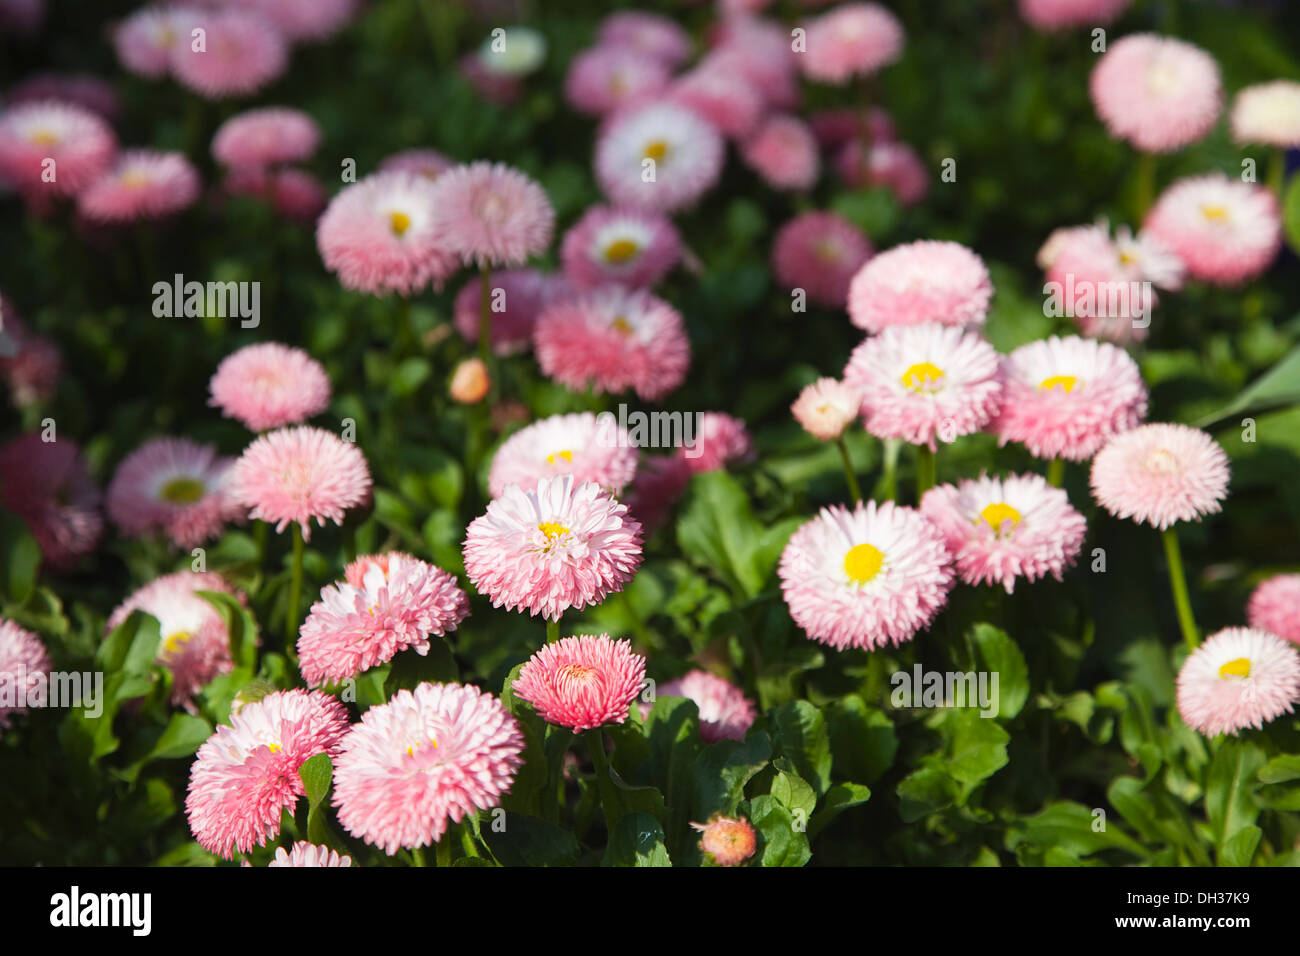 daisy-bellis-perennis-tasso-series-pink-double-flower-heads-of-perennial-DH37K9.jpg